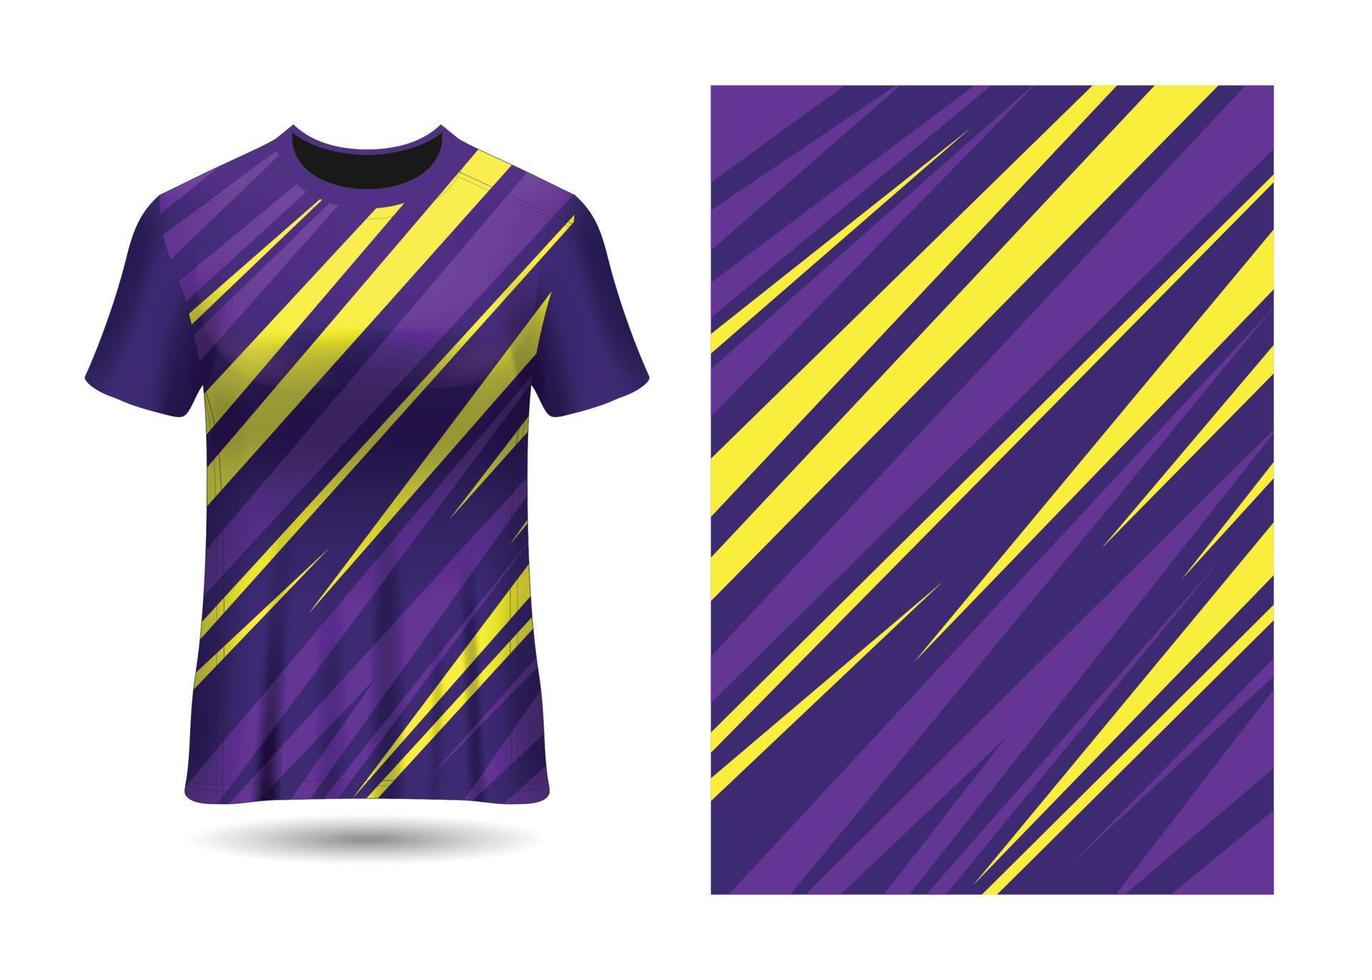 camiseta deportes textura abstracta diseño jersey para carreras fútbol juegos motocross ciclismo vector